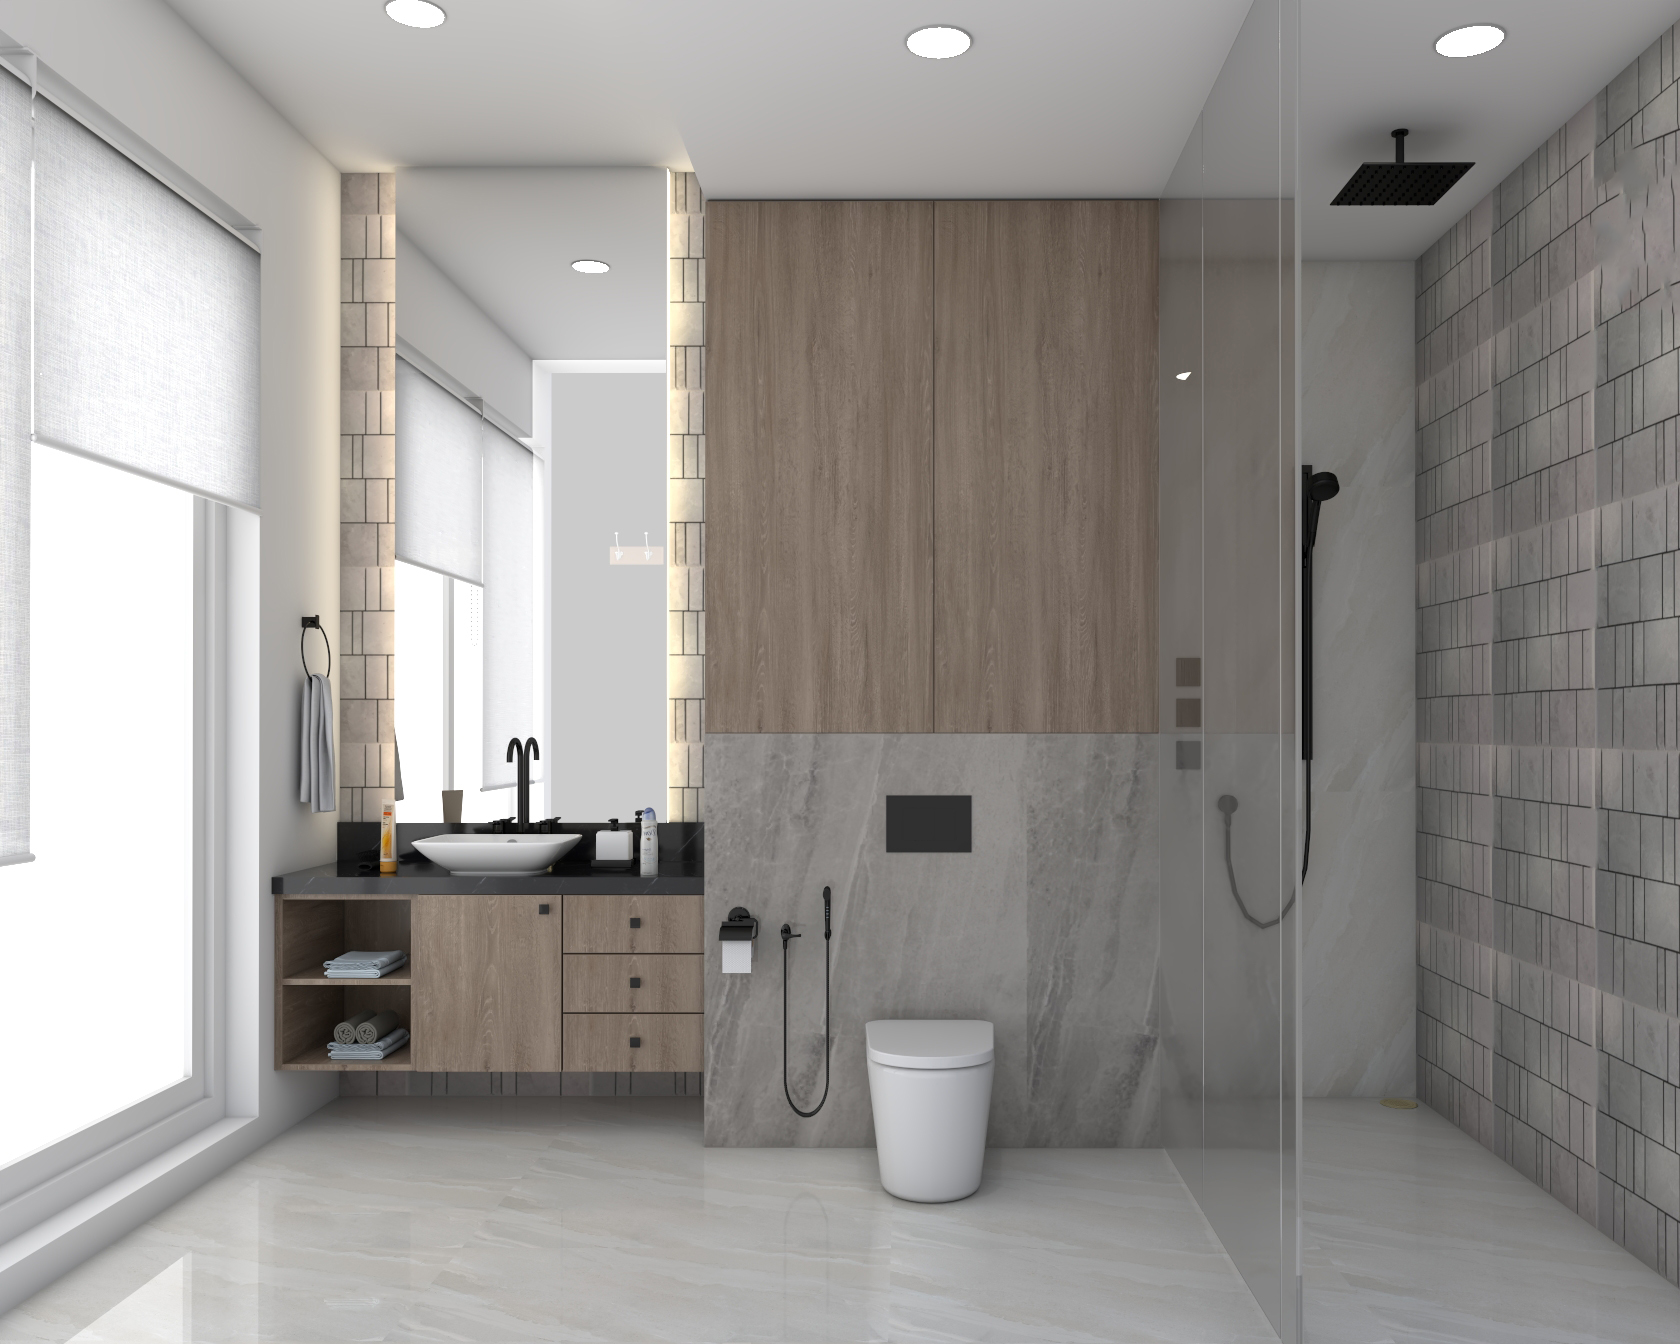 Contemporary Bathroom Design With Storage Unit